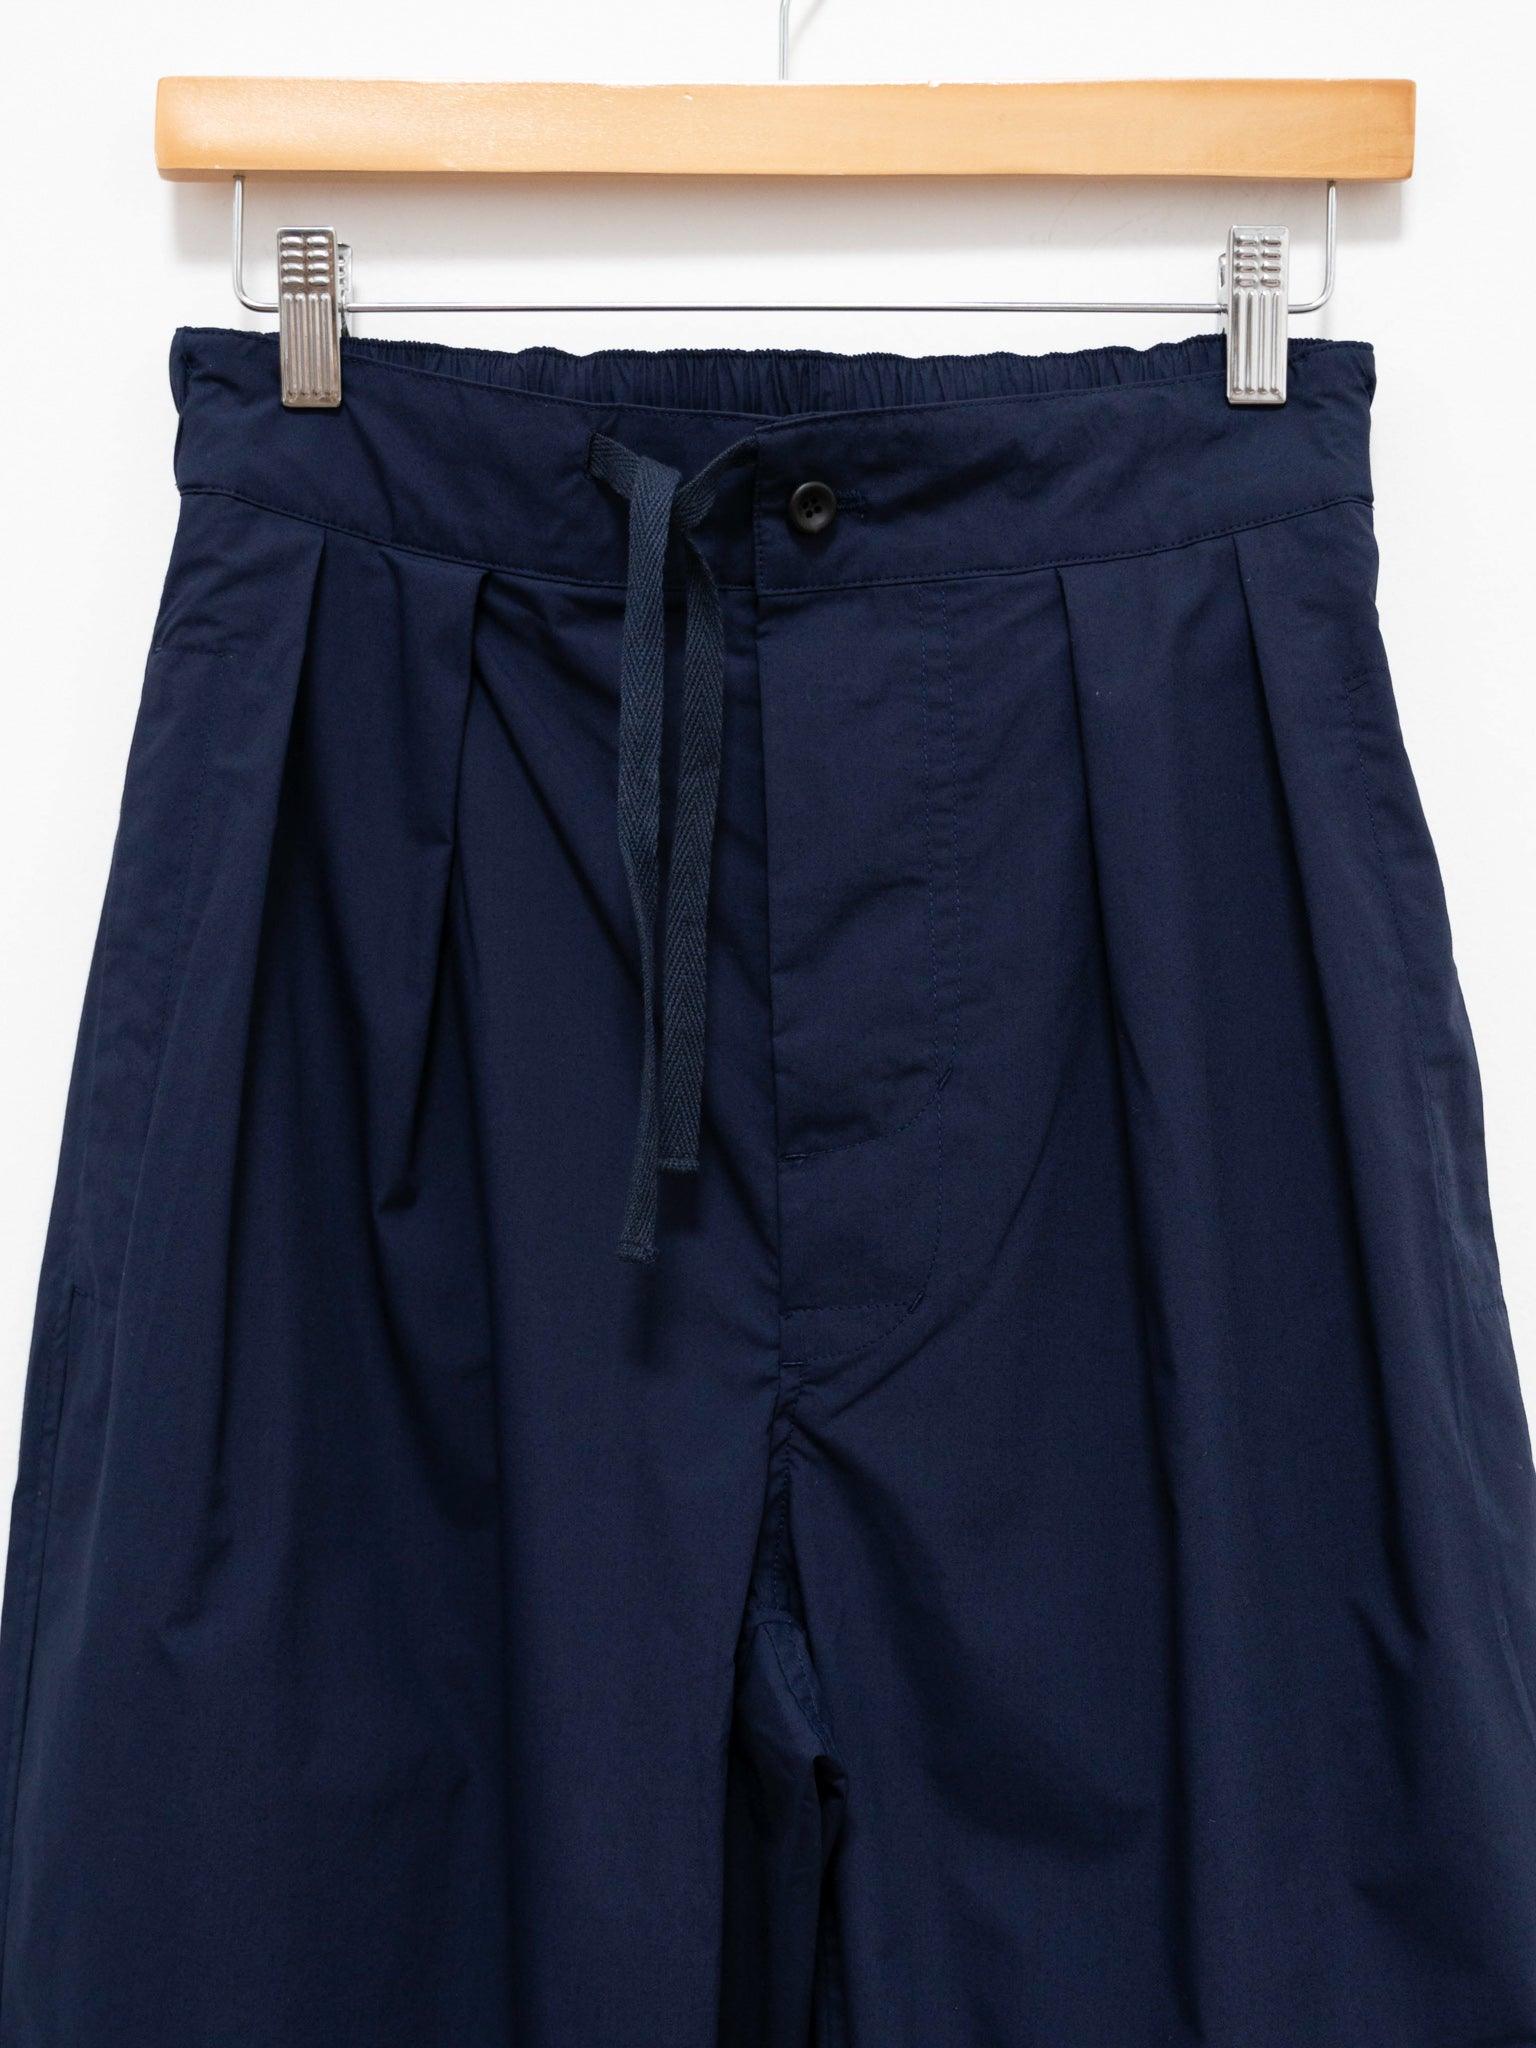 Namu Shop - Document Lightweight Tucked Pants - Navy